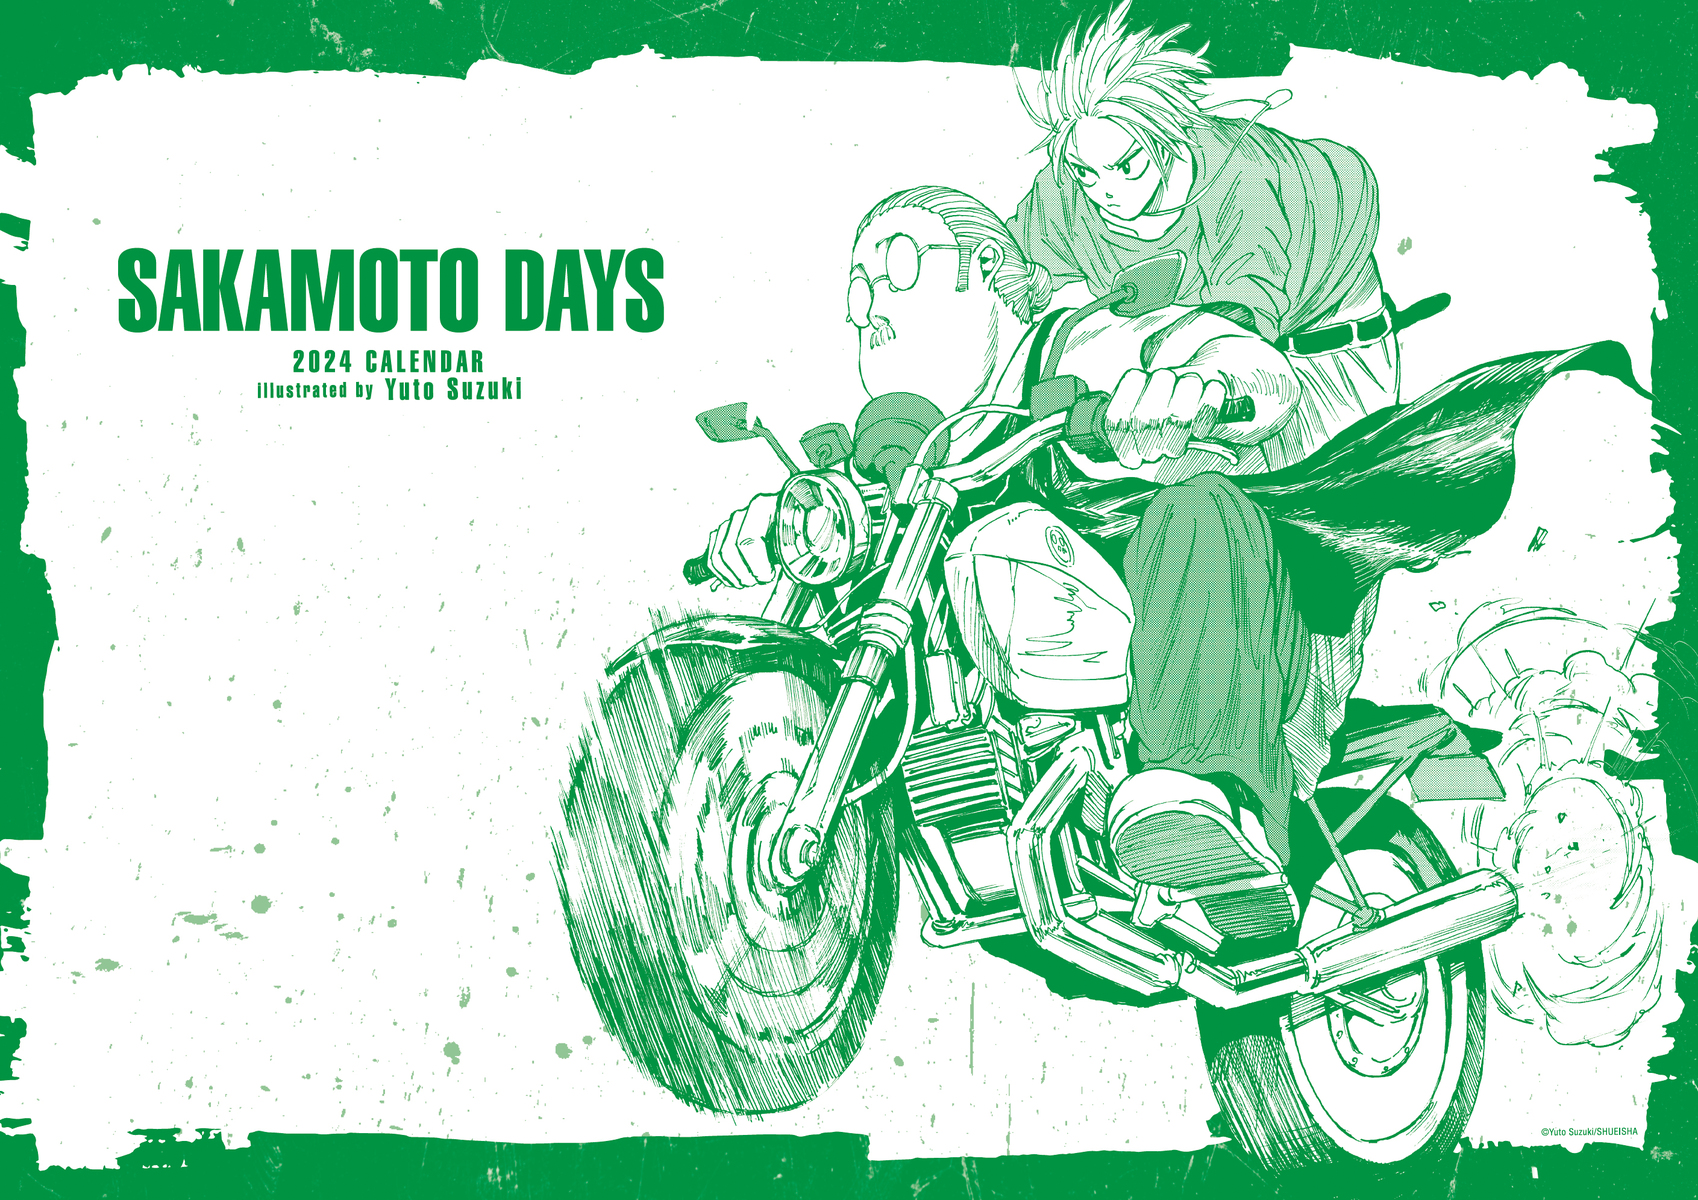 『SAKAMOTO DAYS』コミックカレンダー 2024

の画像2